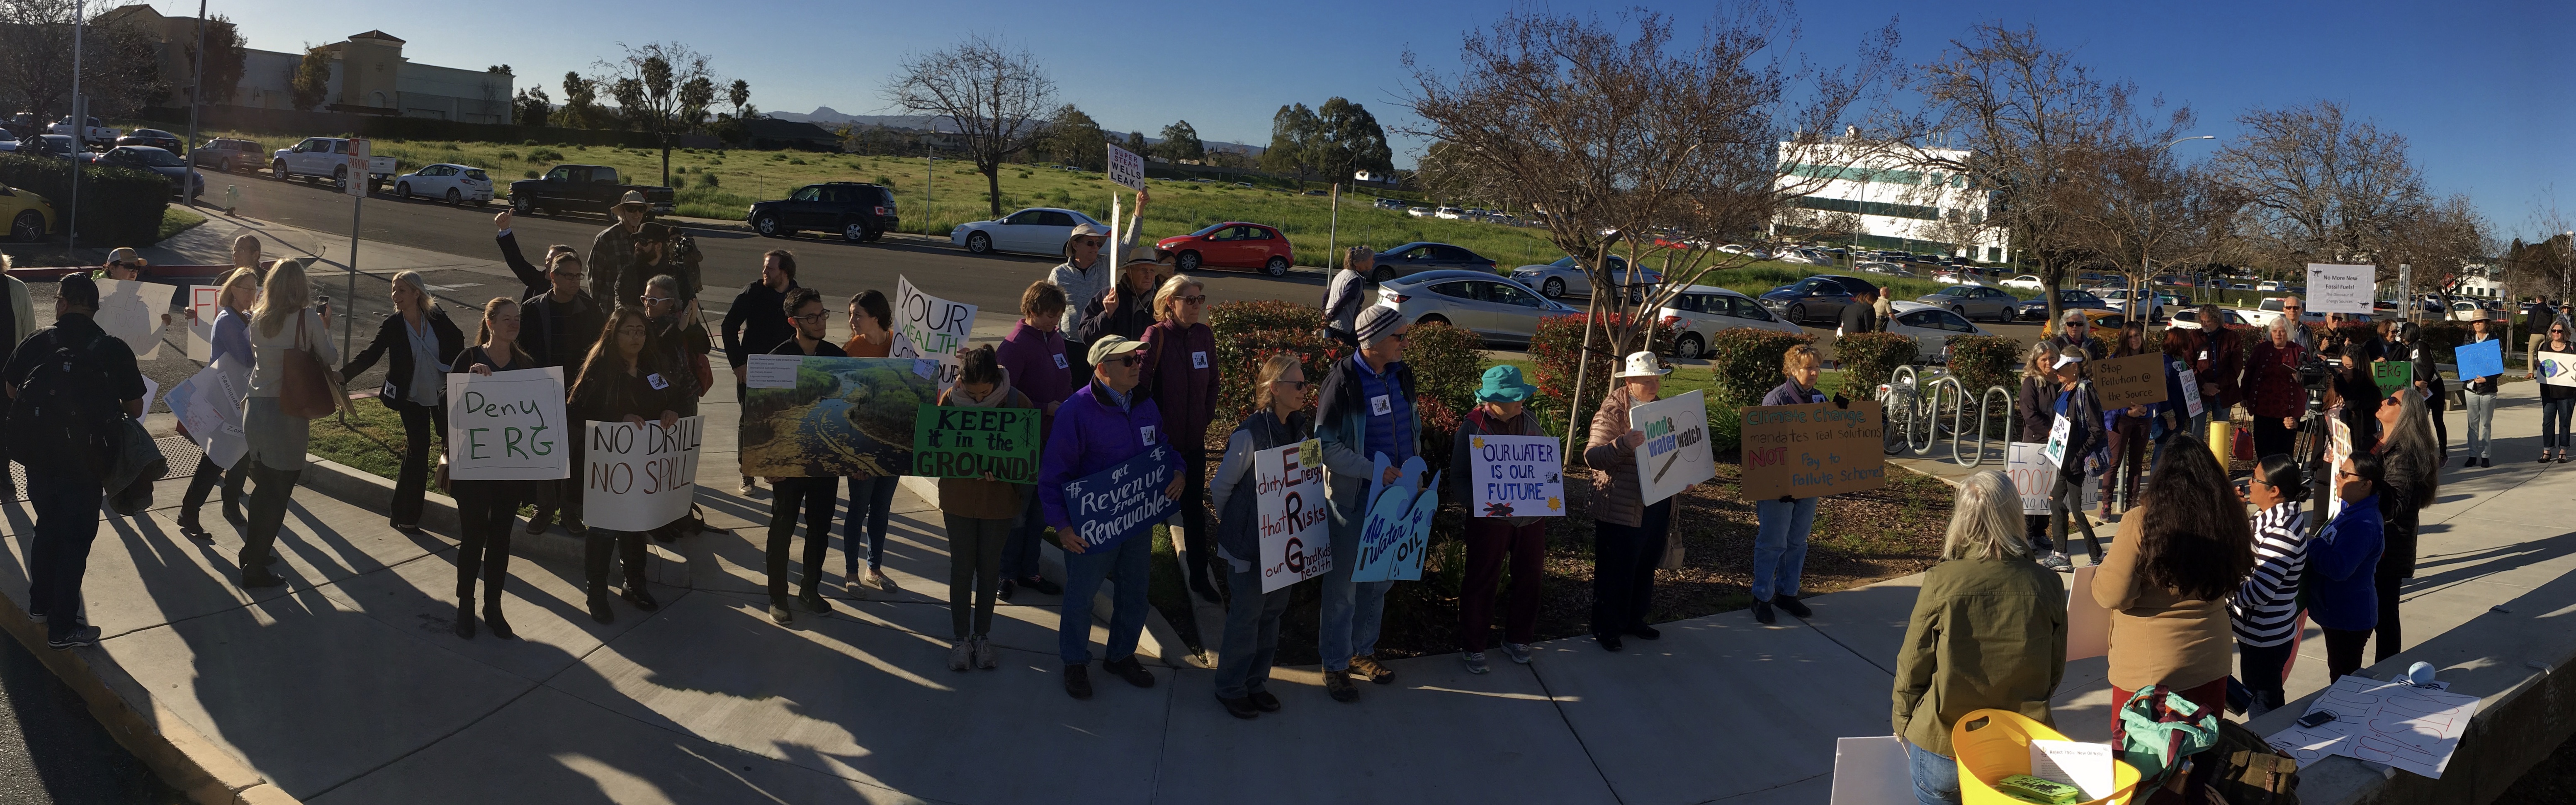 Santa Barbara county oil protests